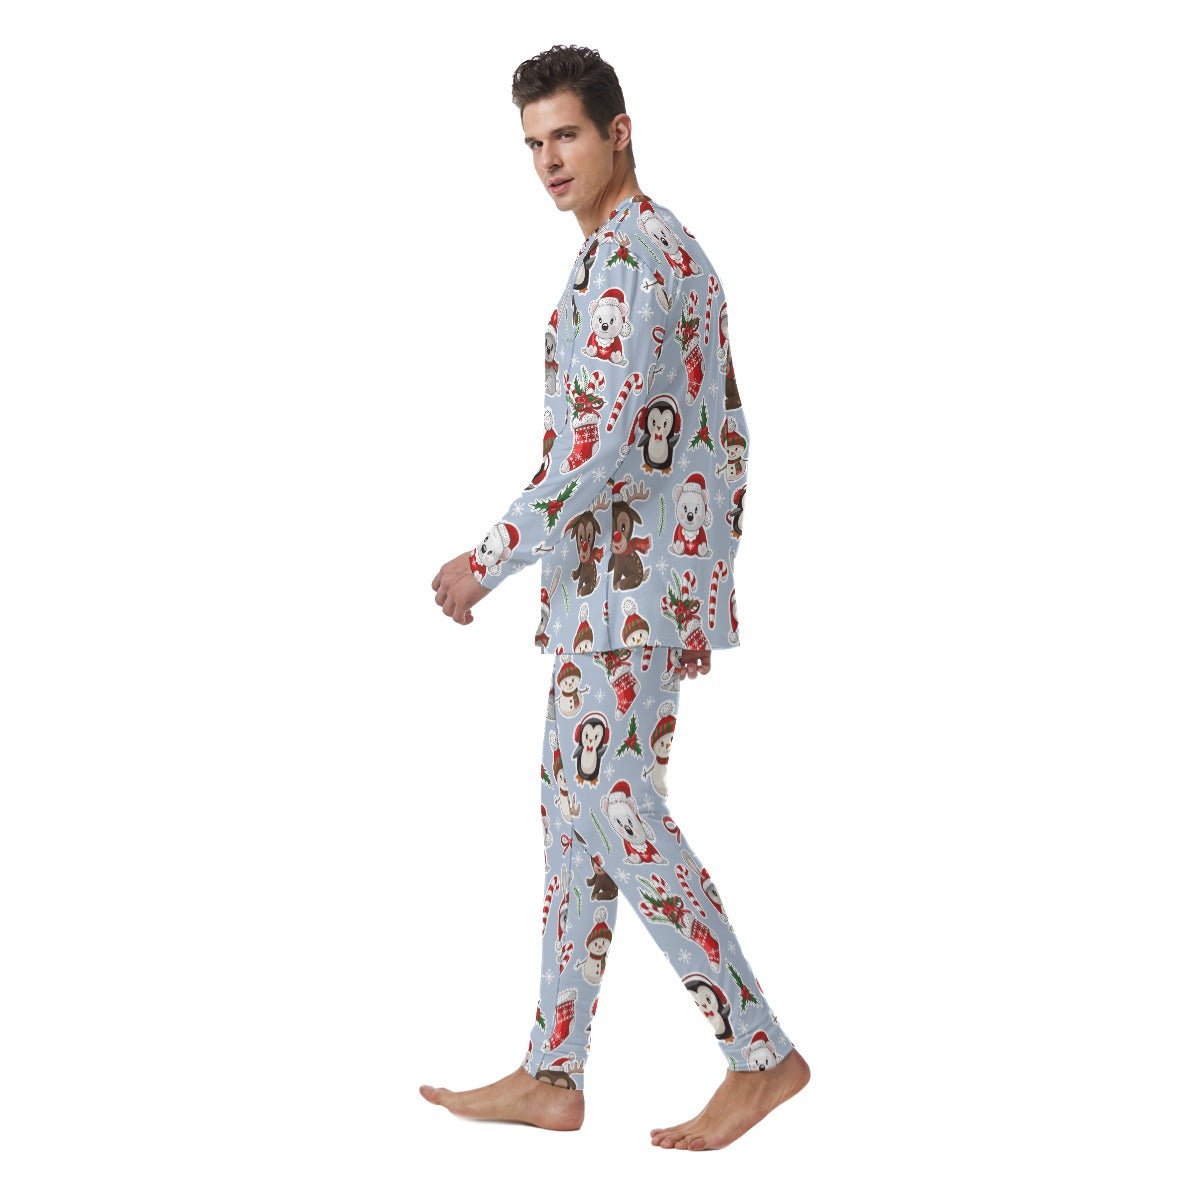 Men's Christmas Pyjamas - Polar Kawaii - Festive Style